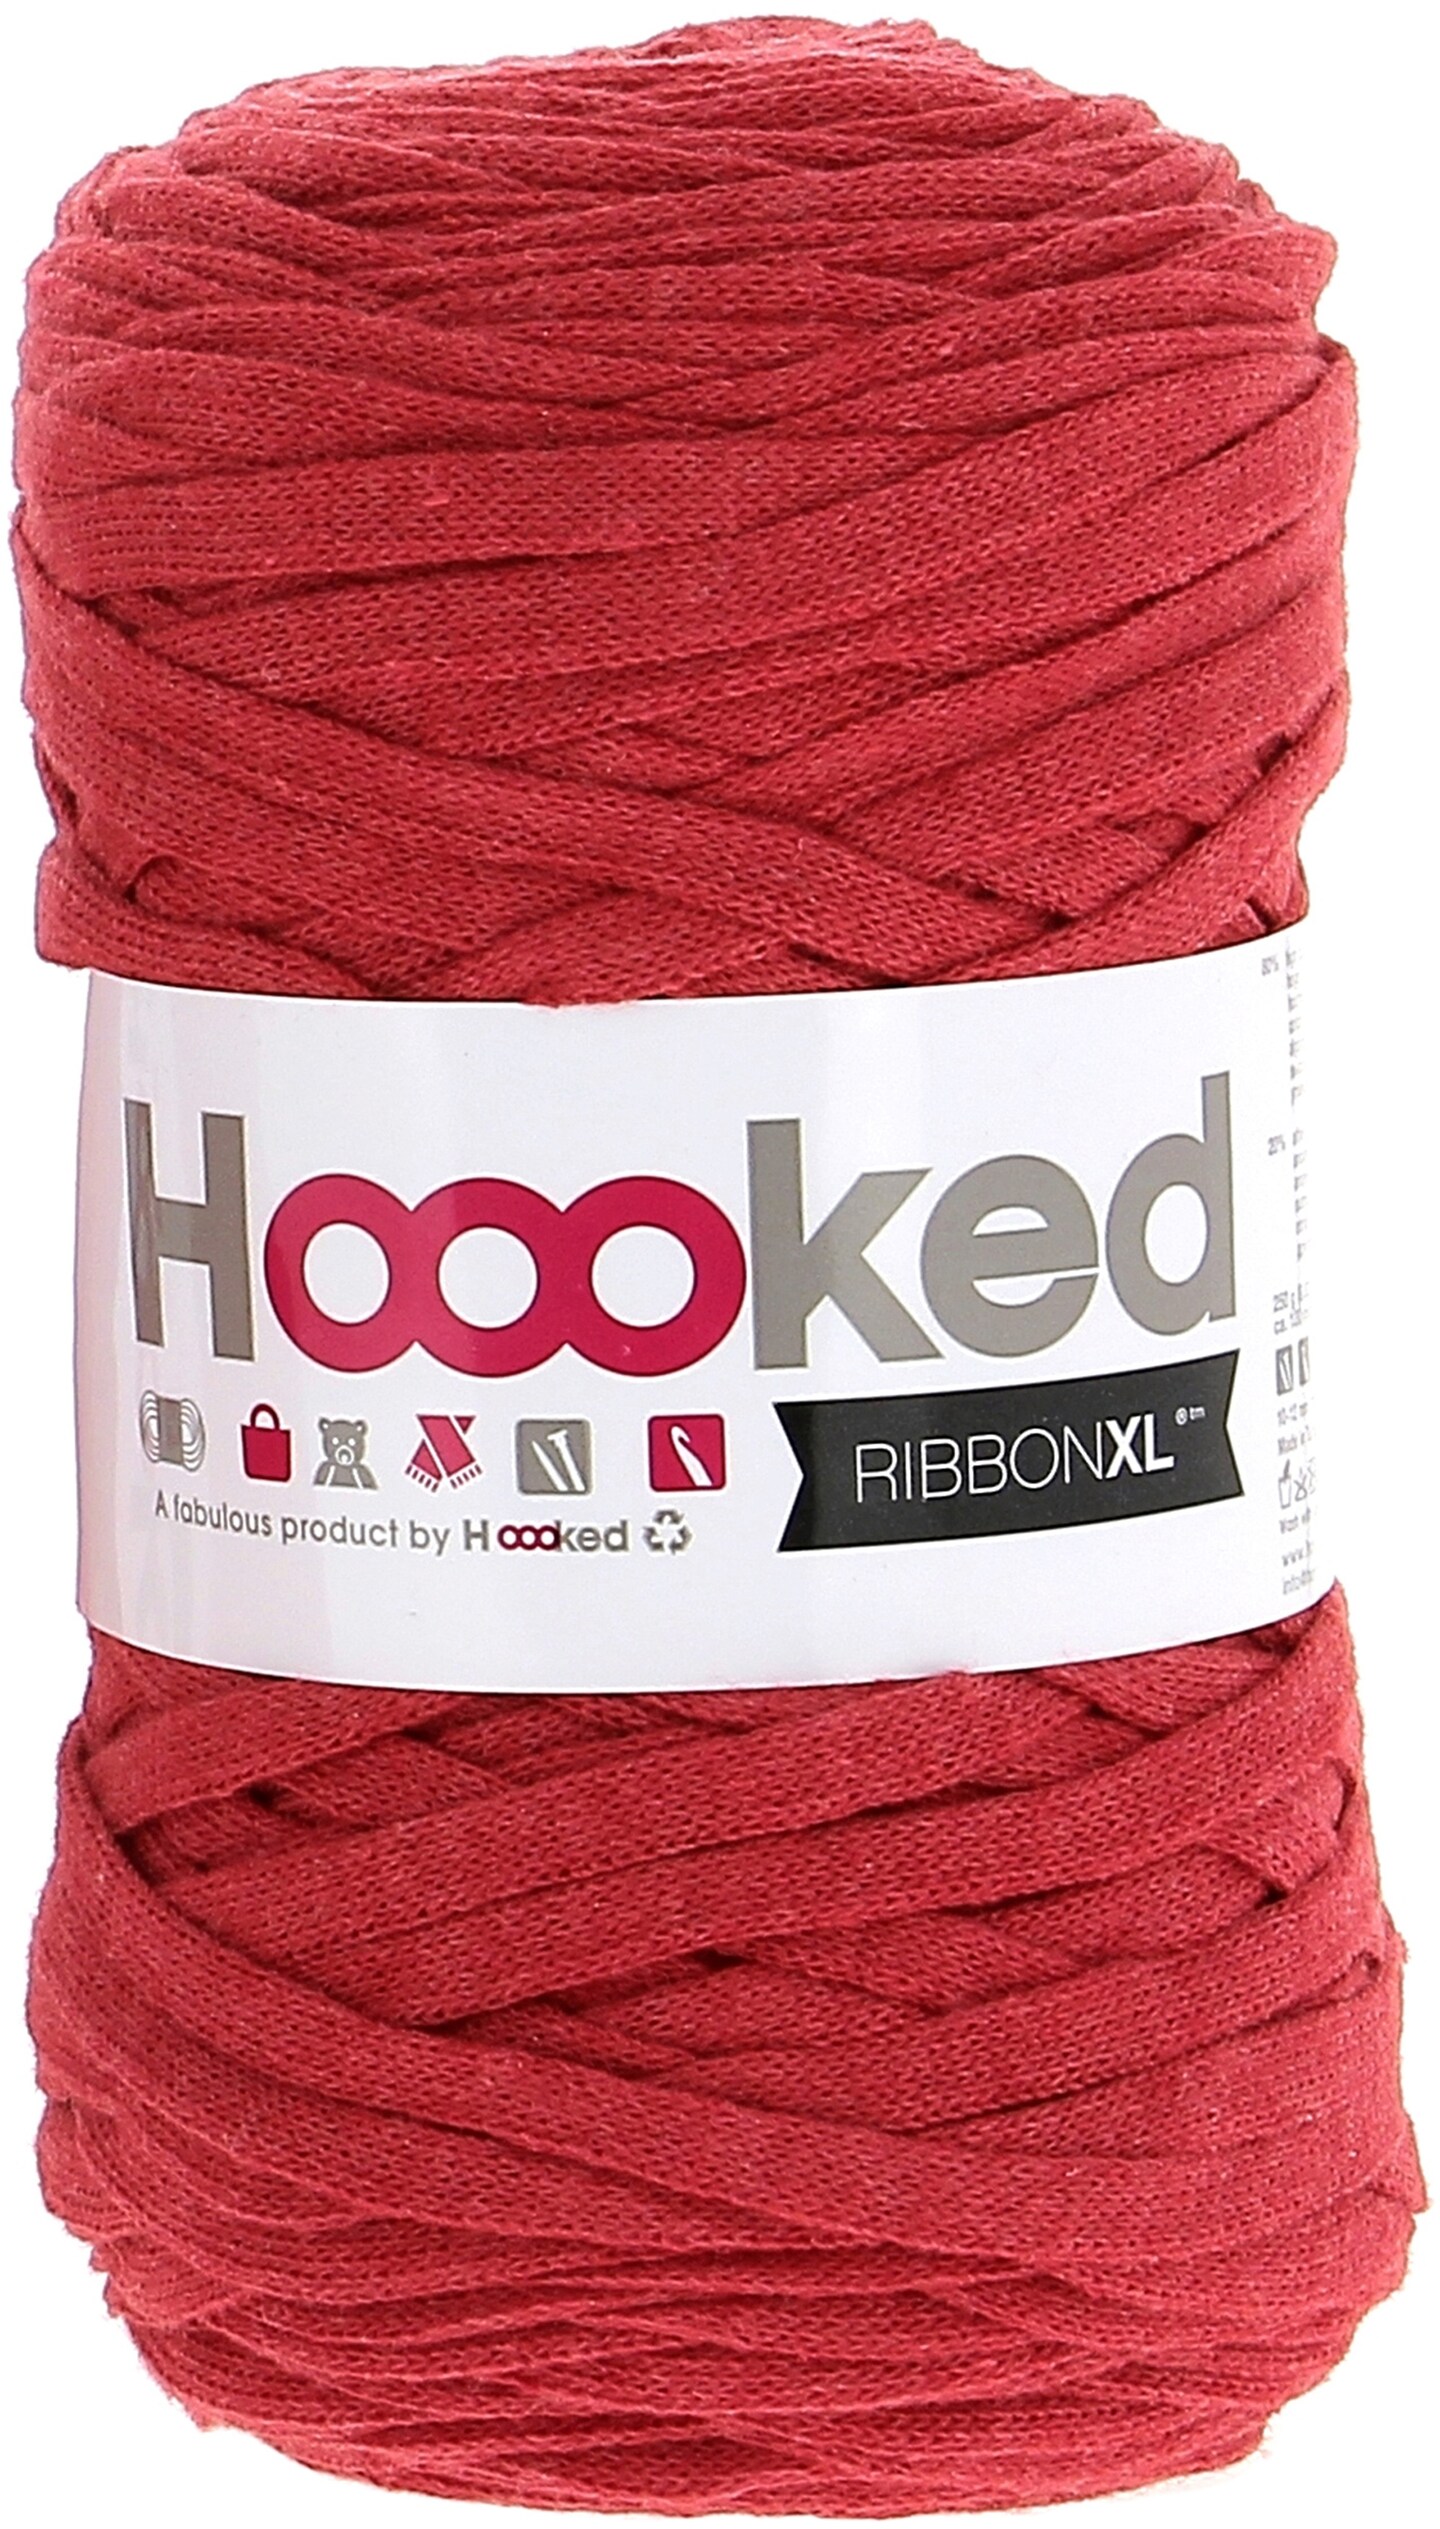 Hoooked RibbonXL Yarn